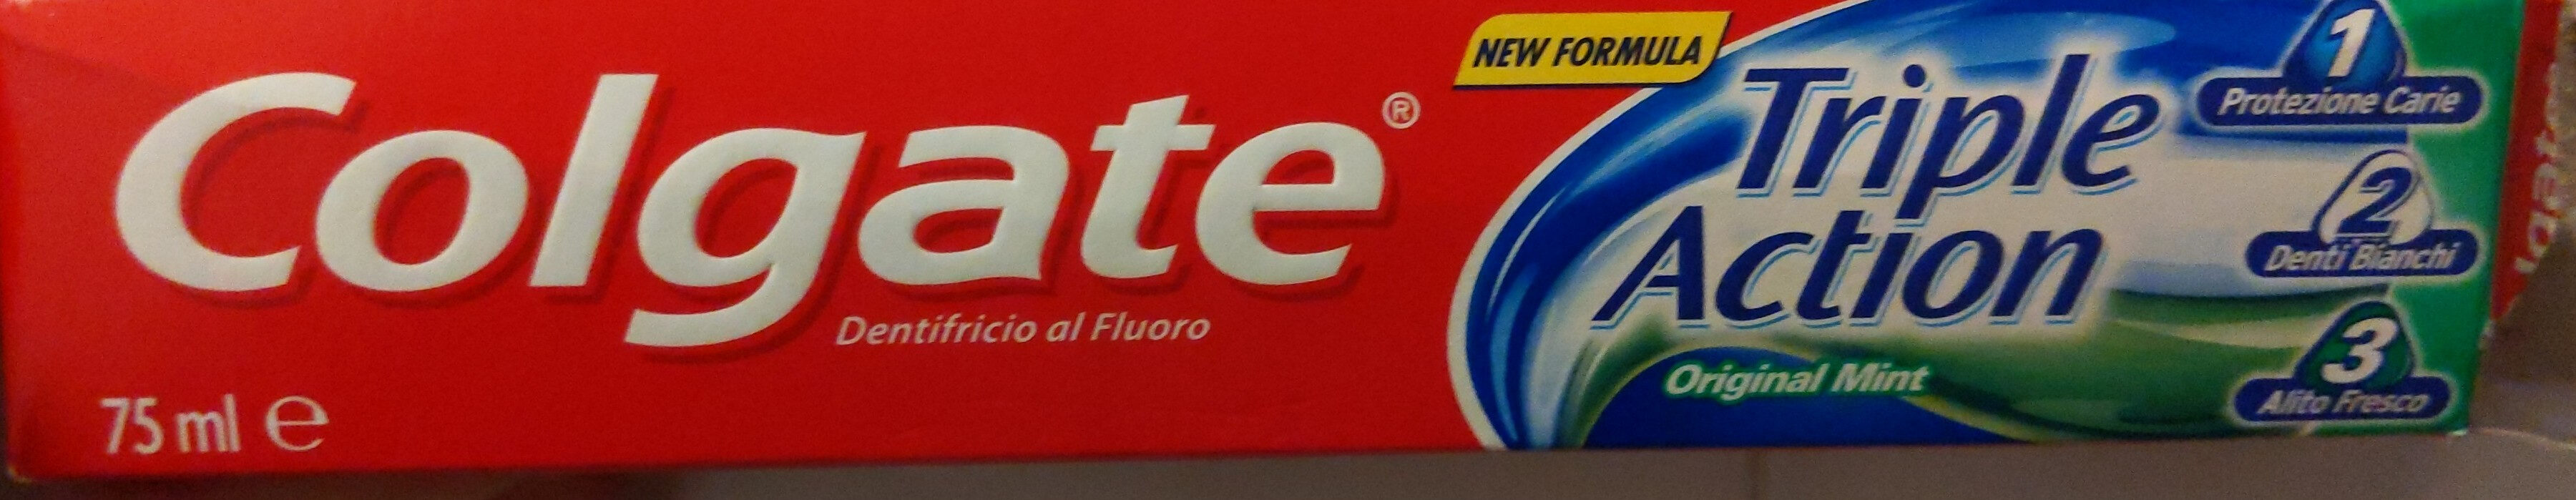 Colgate dentifricio triple action original mint - Tuote - it